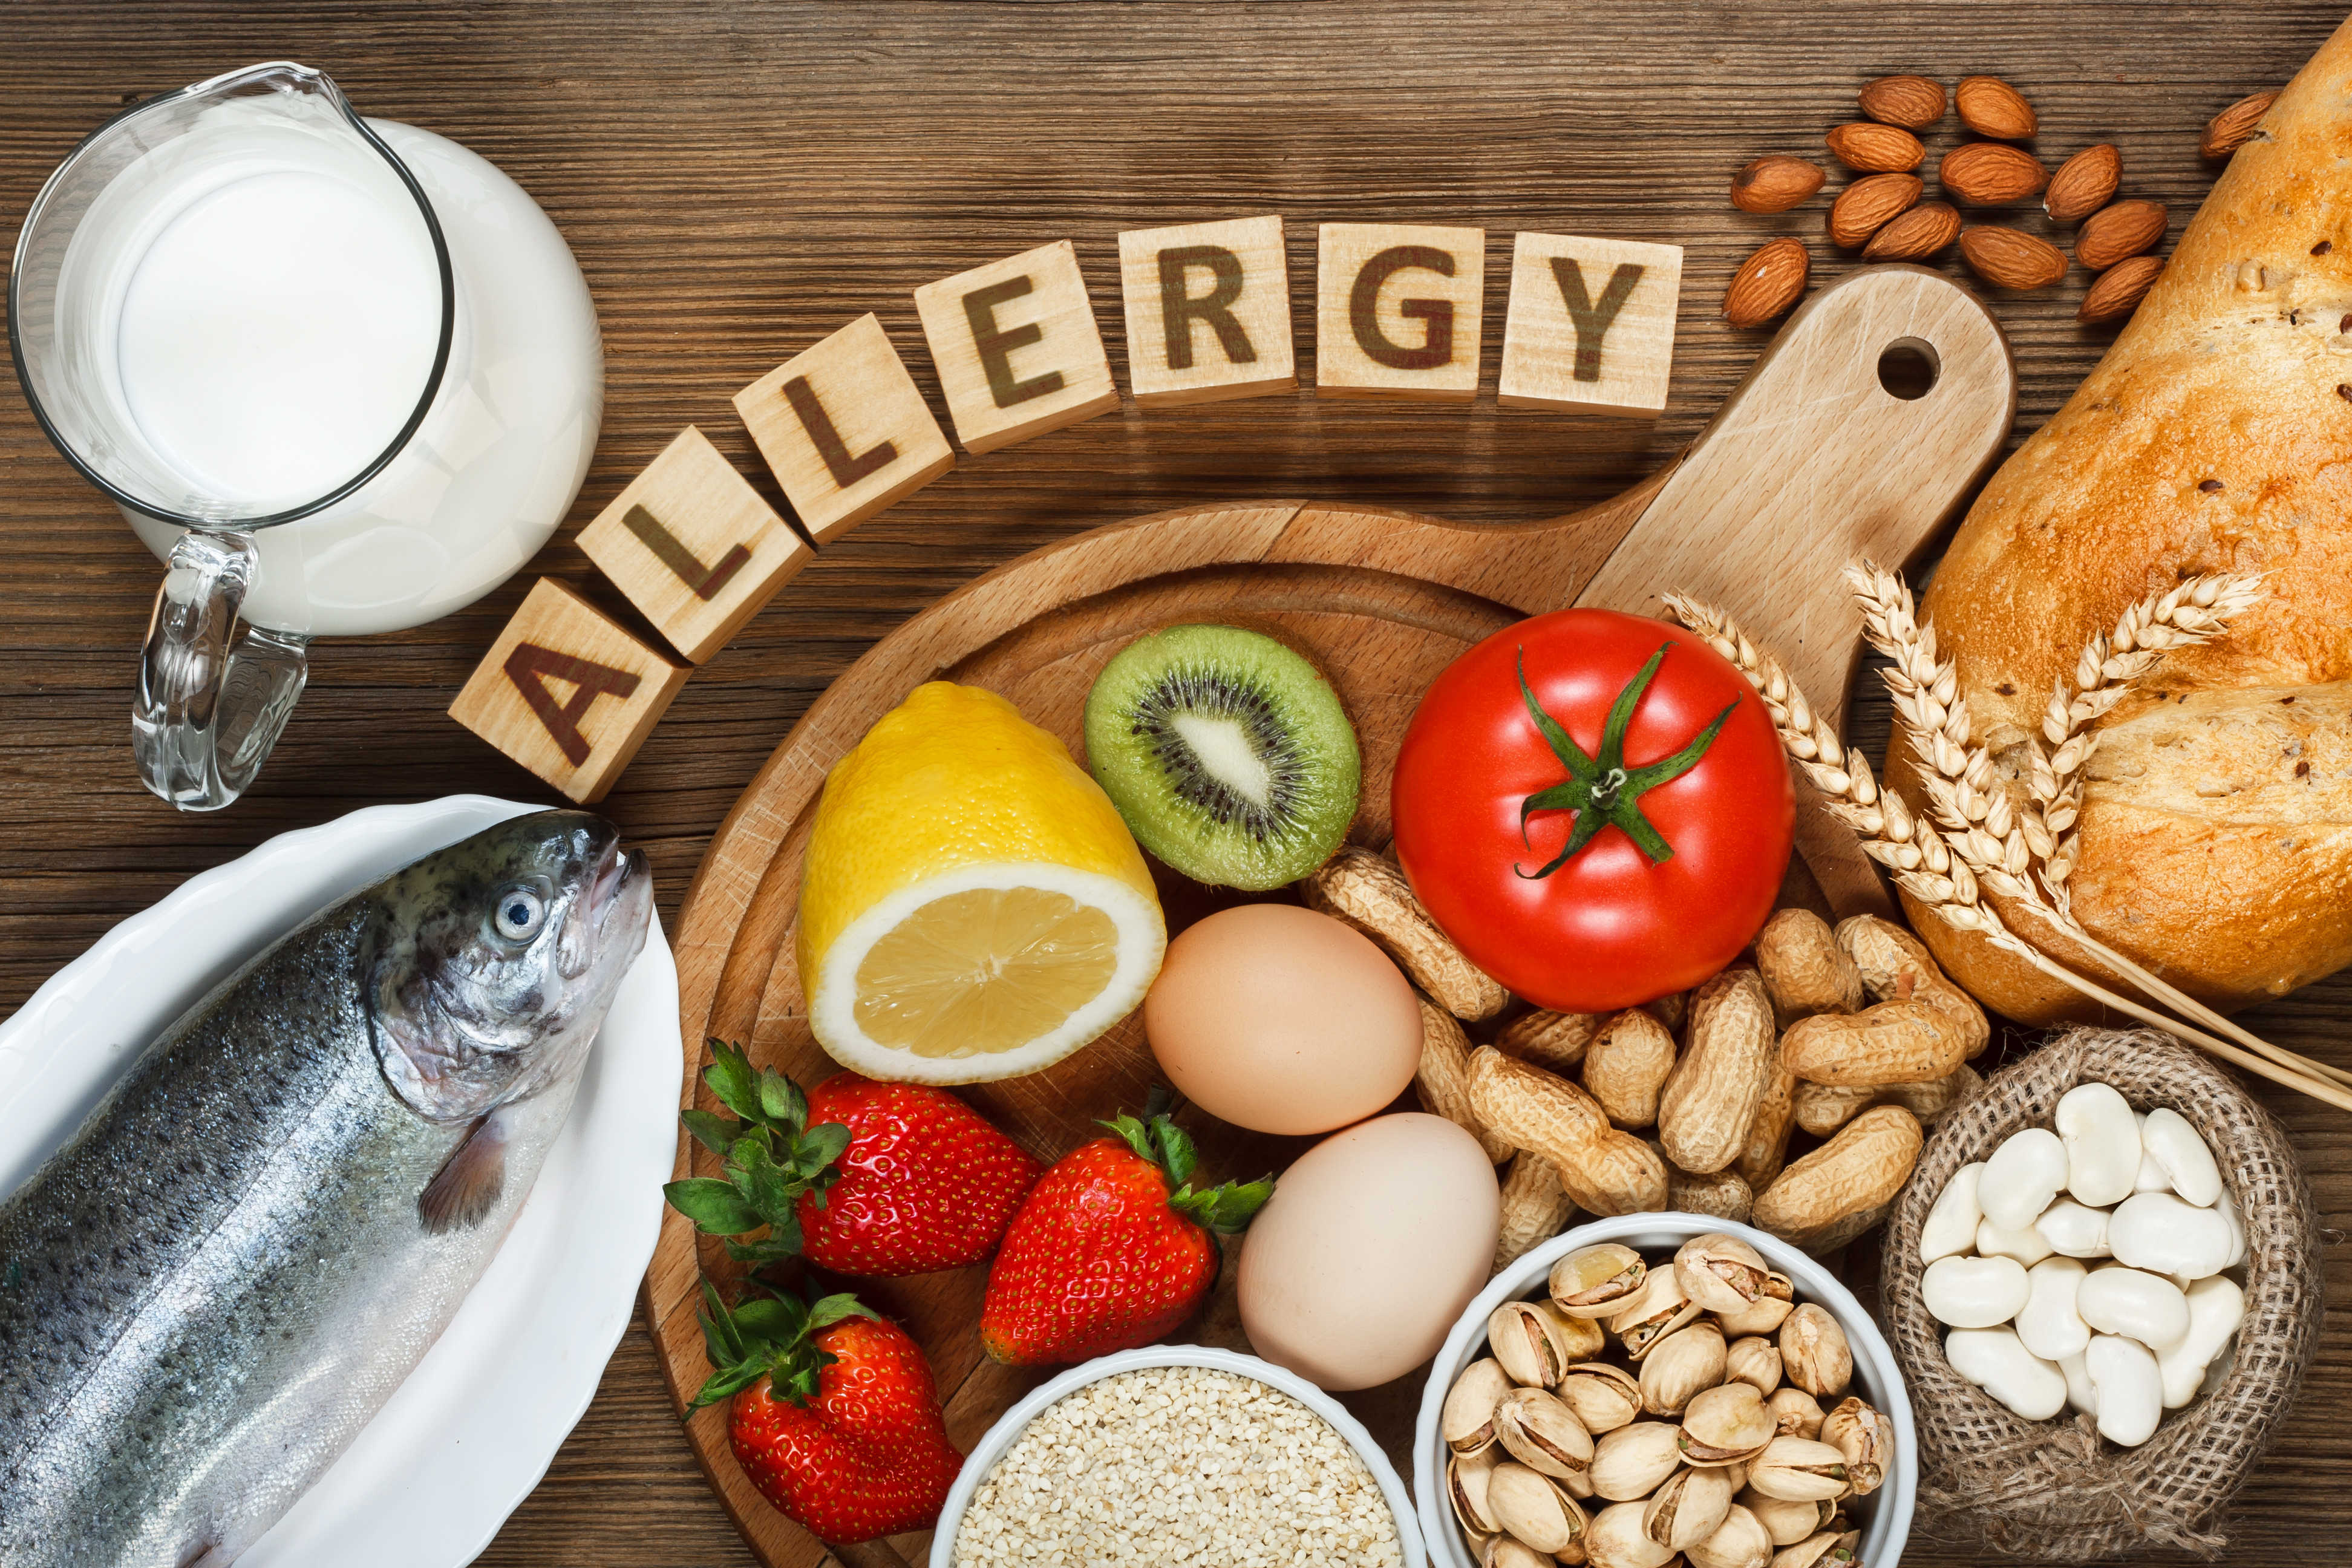 Пищевые аллергены